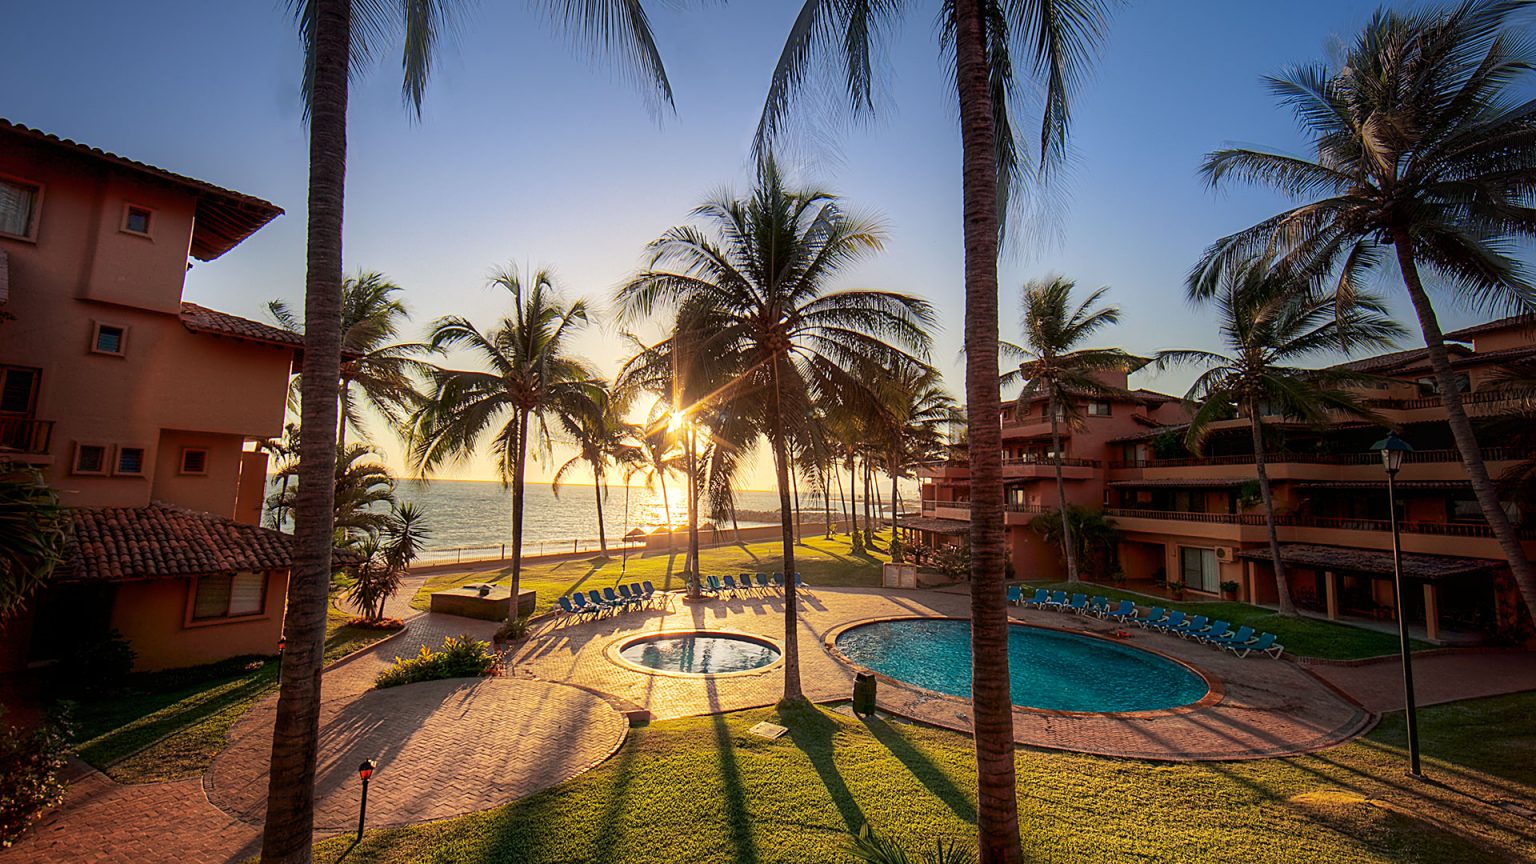 oyal-holiday-hotel-resort-vista-alberca-park-royal-los-tules-mexico-jalisco-los-tules-1536x864